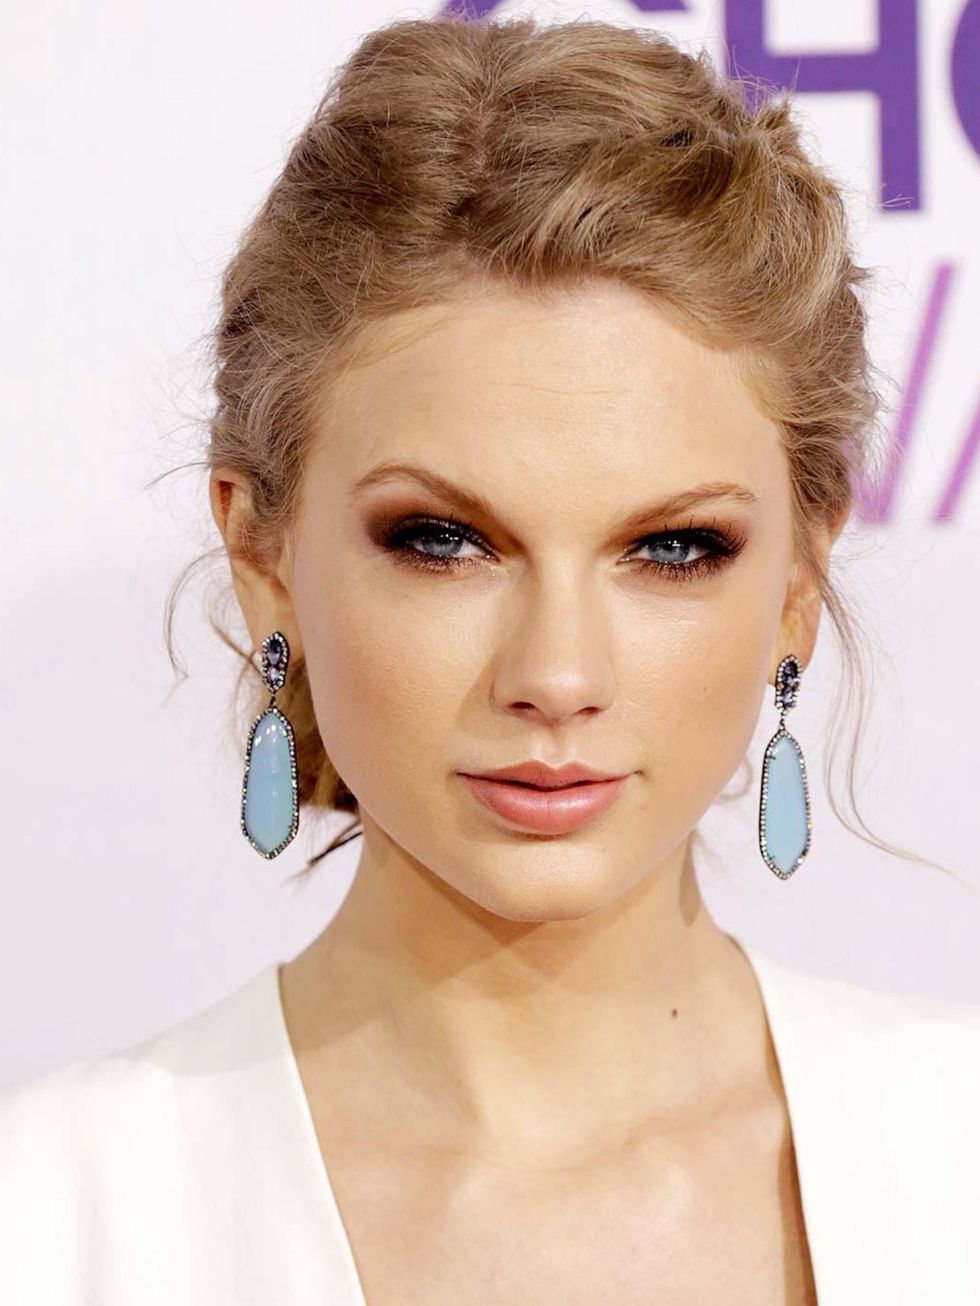 <p>Taylor Swift's make-up artist reveals her beauty secrets <a href="http://www.elleuk.com/beauty/news/exclusive-taylor-swift-s-make-up-artist-reveals-her-secrets">here </a></p>